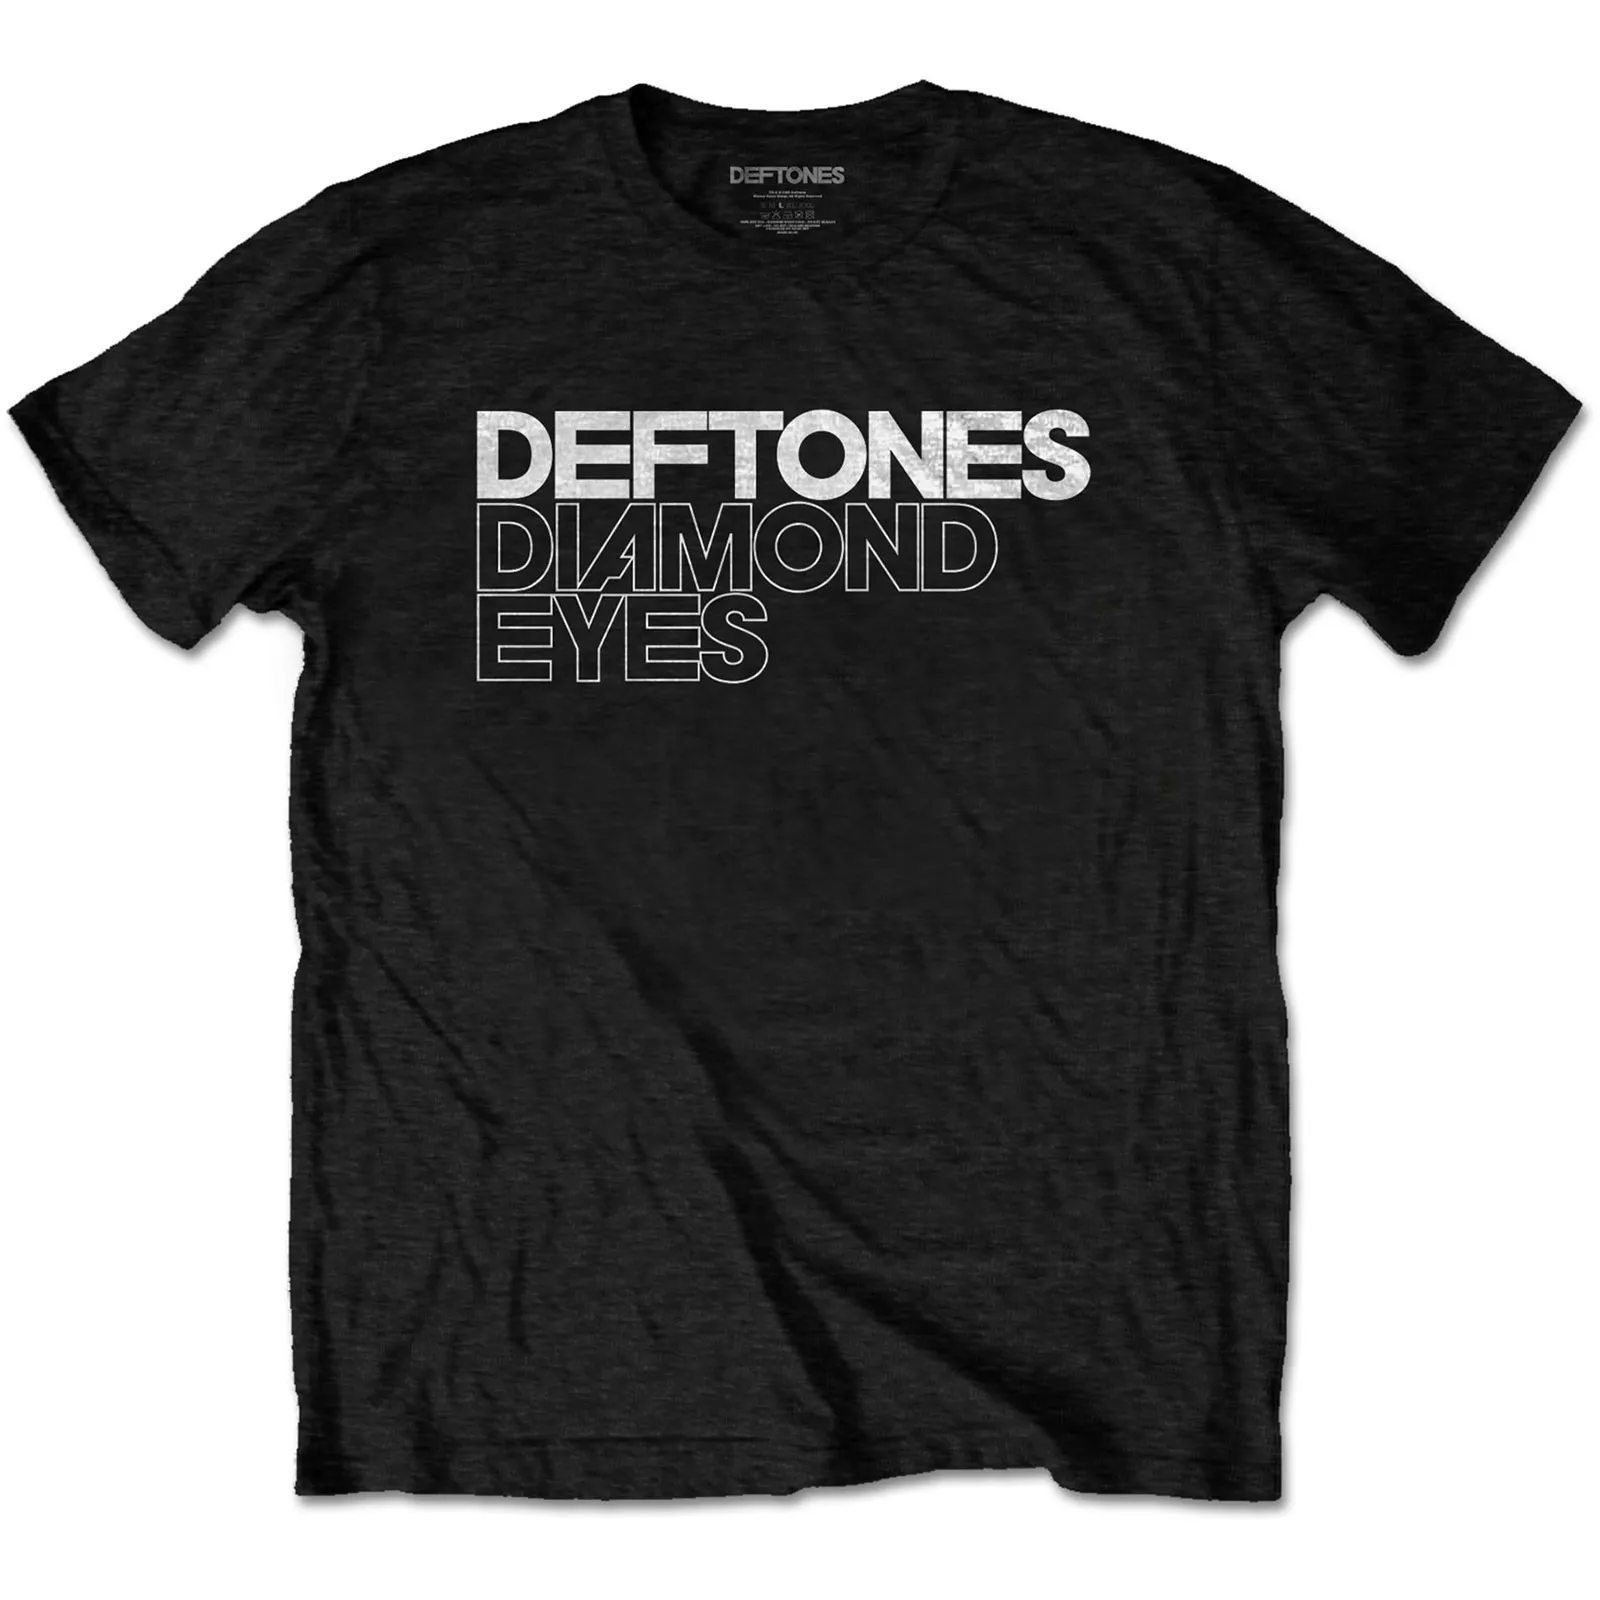 Deftones - Unisex T-Shirt Diamond Eyes artwork